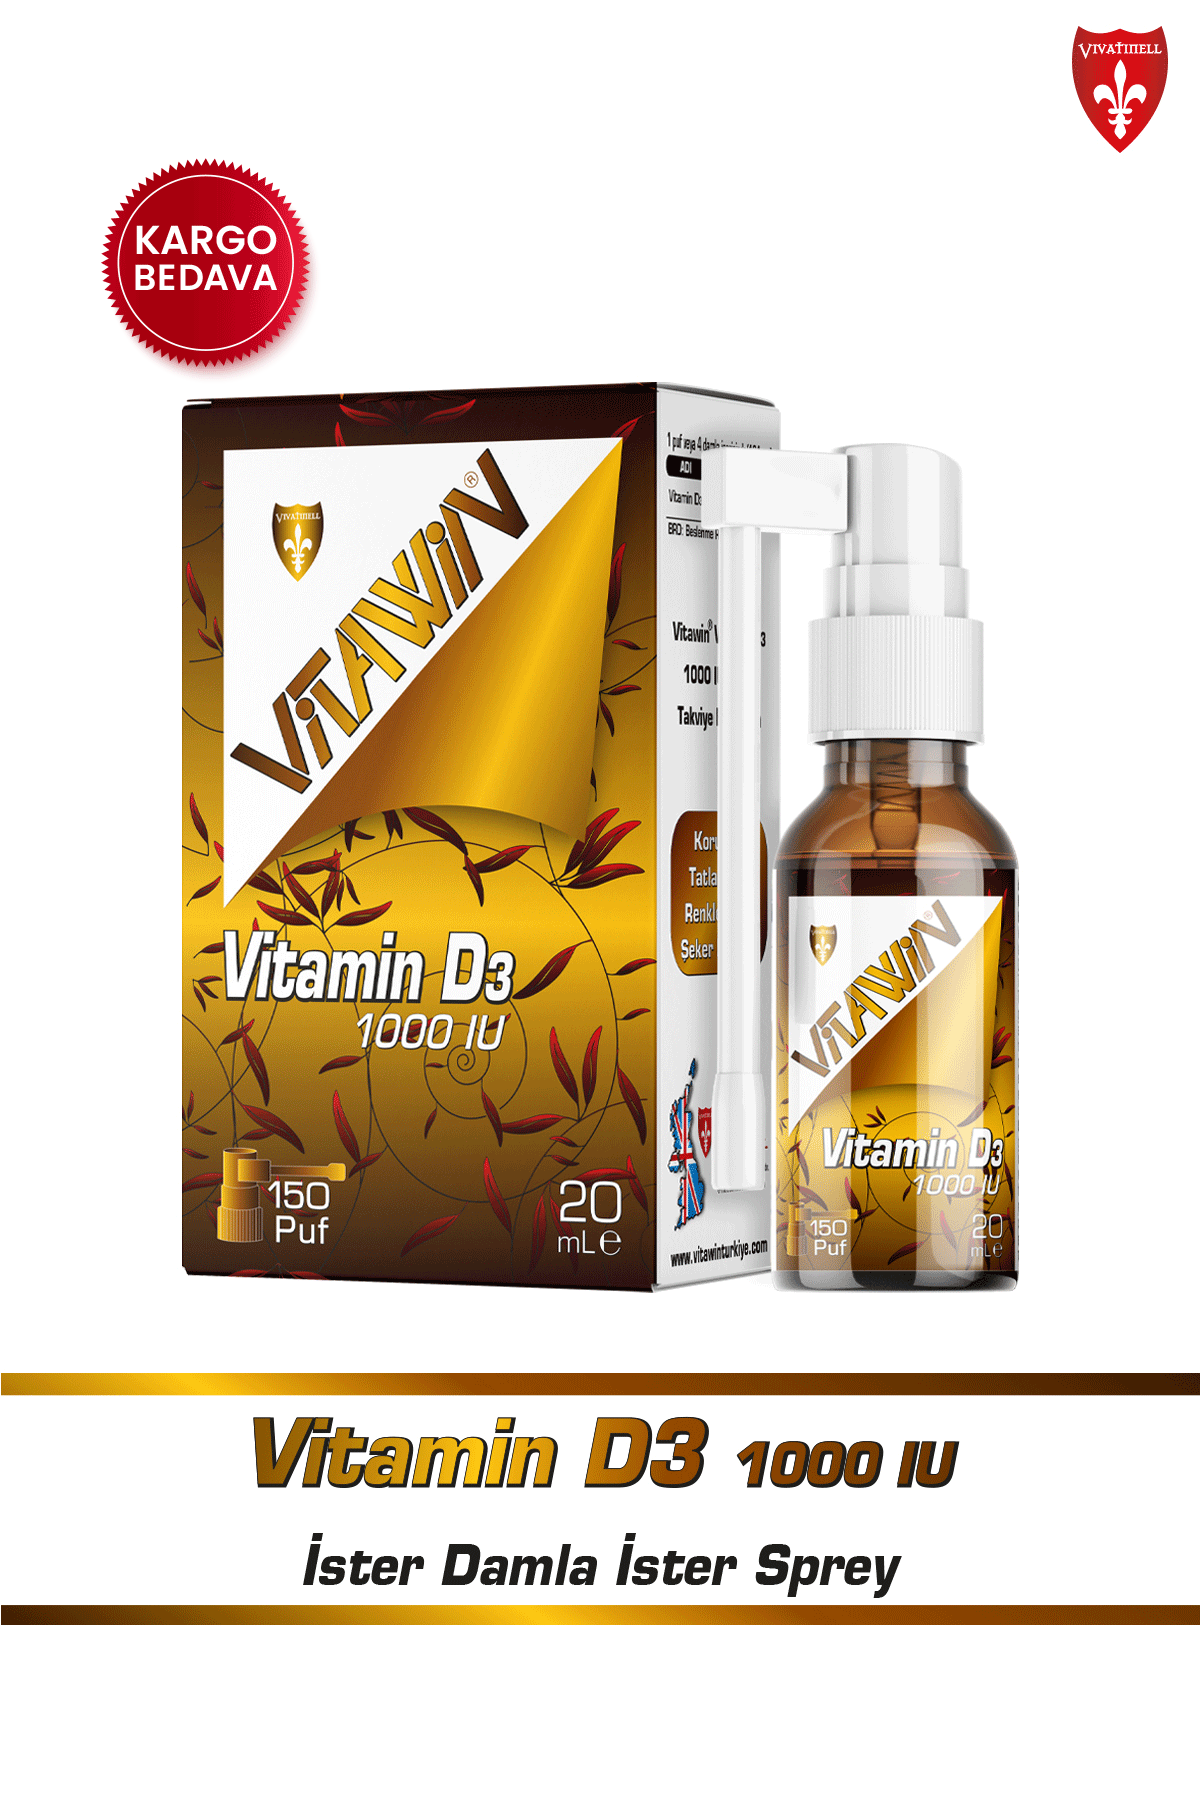 Vitawin Vitamin D3 1000 Iu Sprey Damla 150 Puf 20 Ml